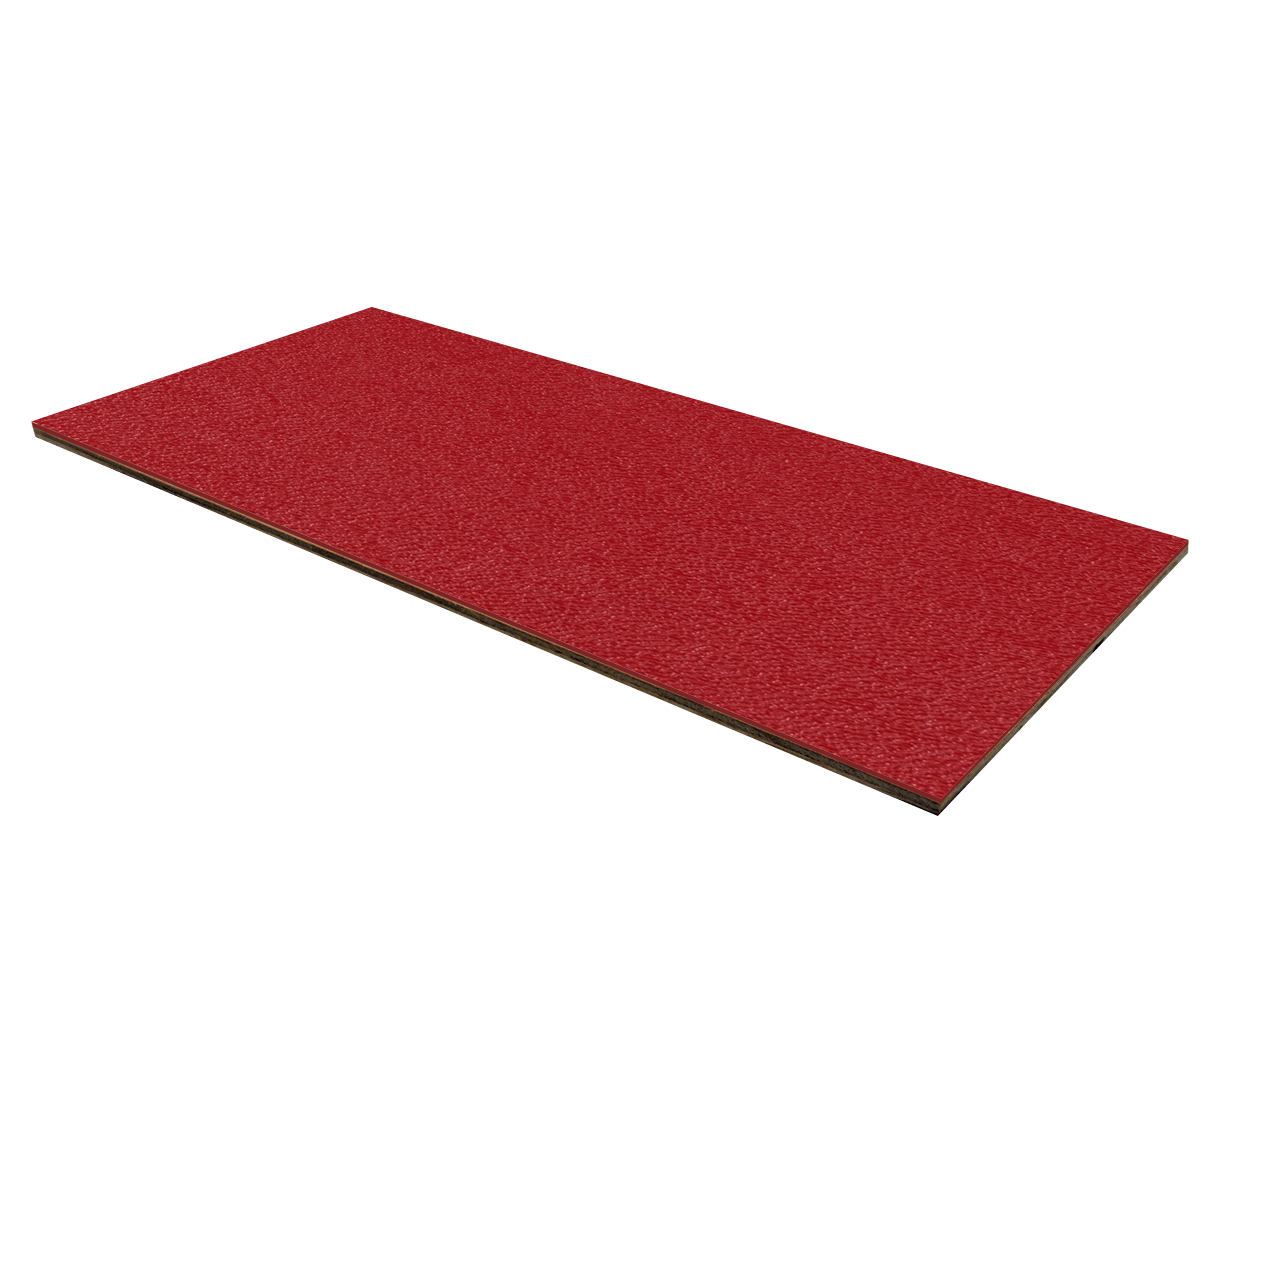 1/8" Luan Plywood ABS Laminate - Red